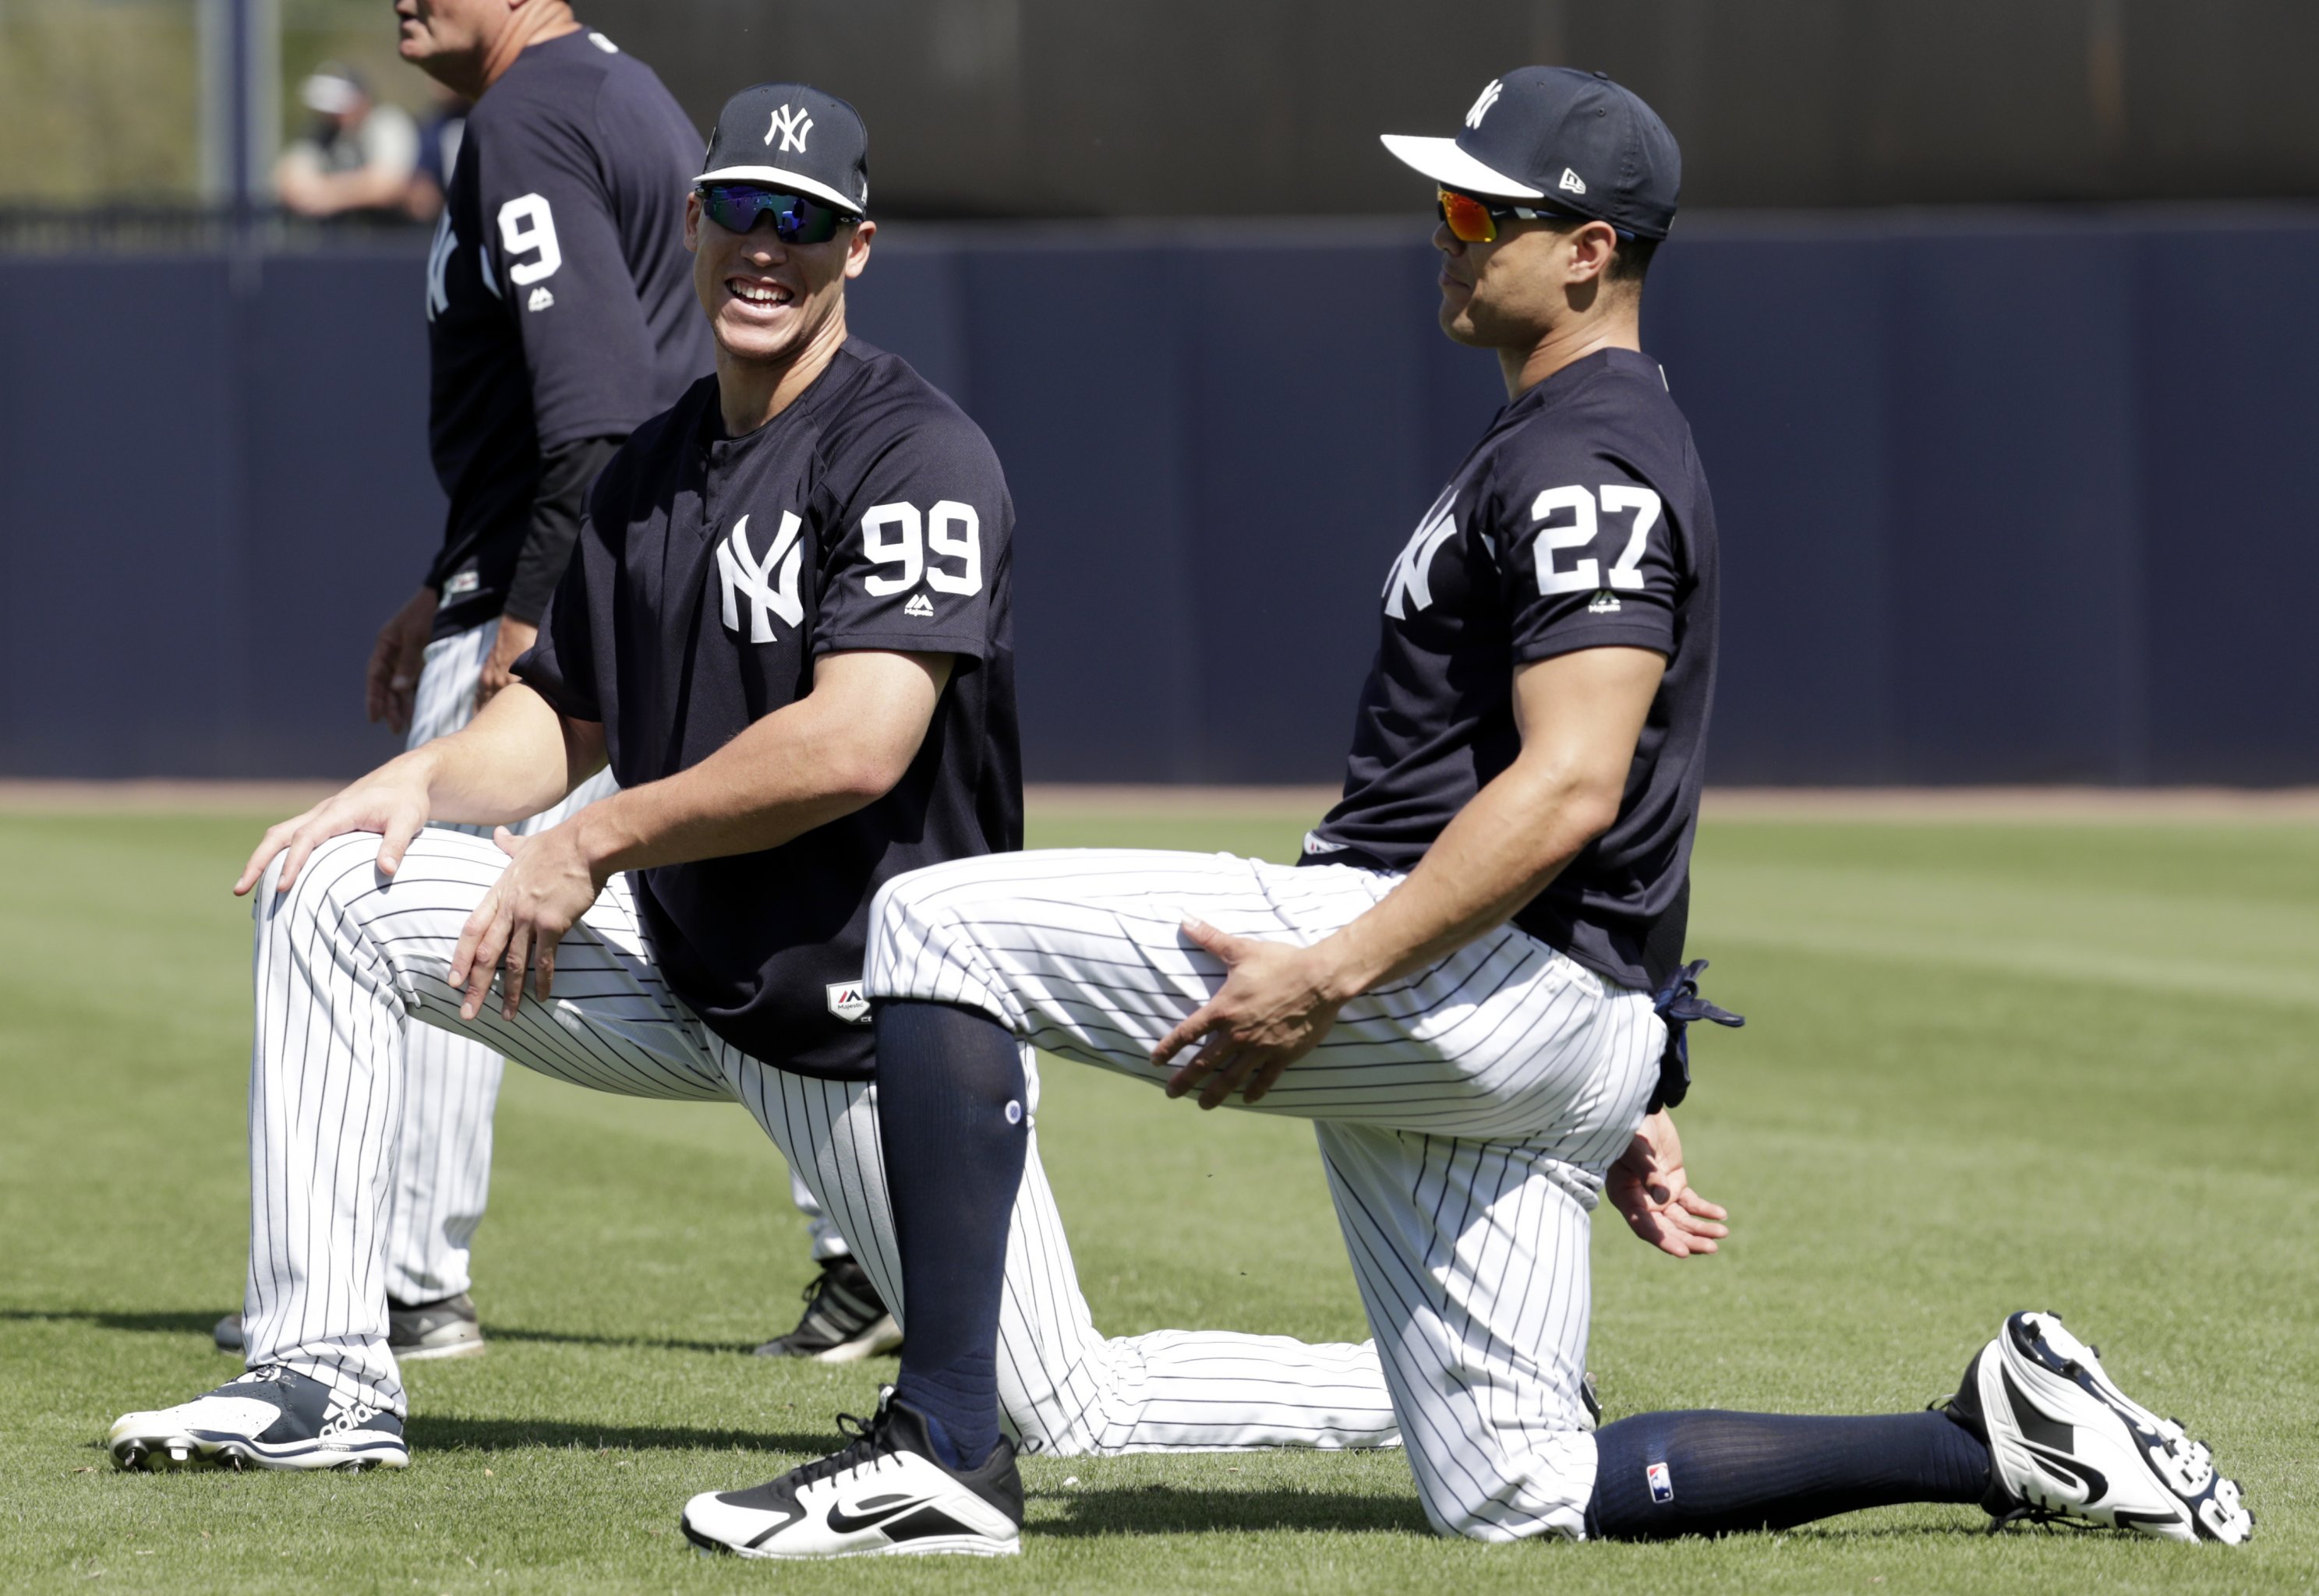 Watch Giancarlo Stanton Smash 3 Homers in Yankees' Spring Game